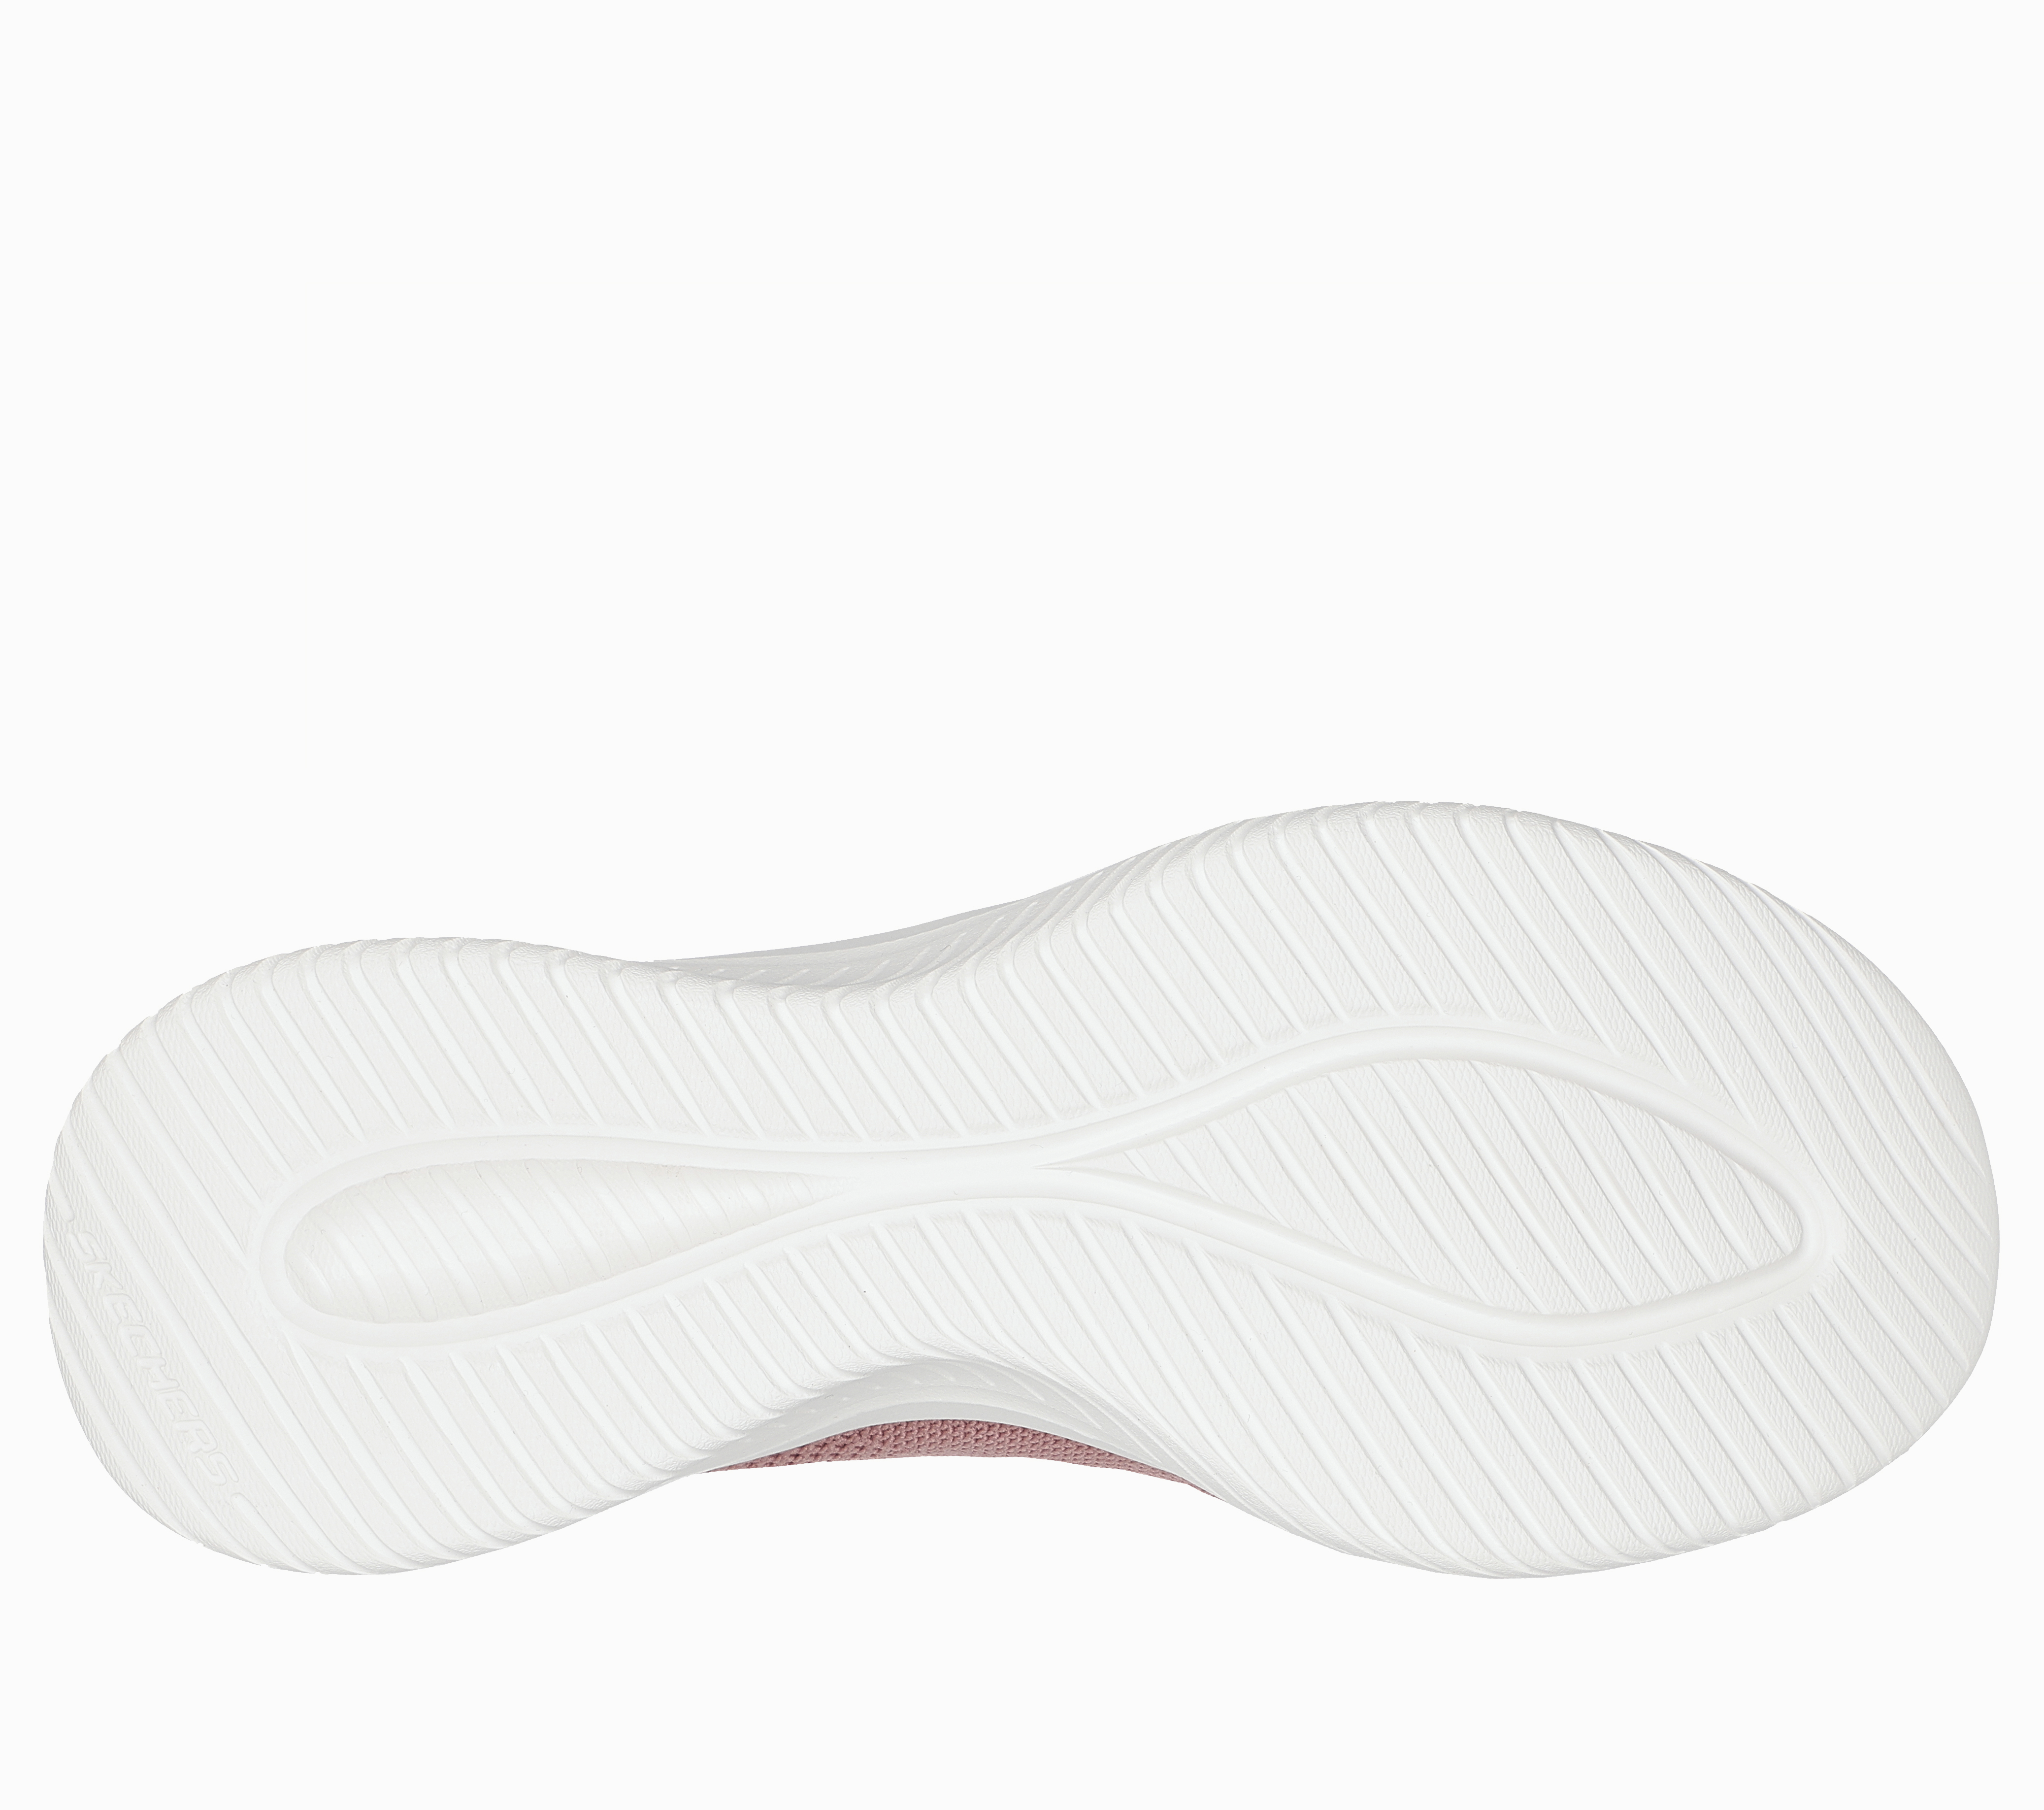 Skechers Flex Appeal Sweet Spot black white sneakers size US 7 NEW in box  NIB - $57 (20% Off Retail) - From J